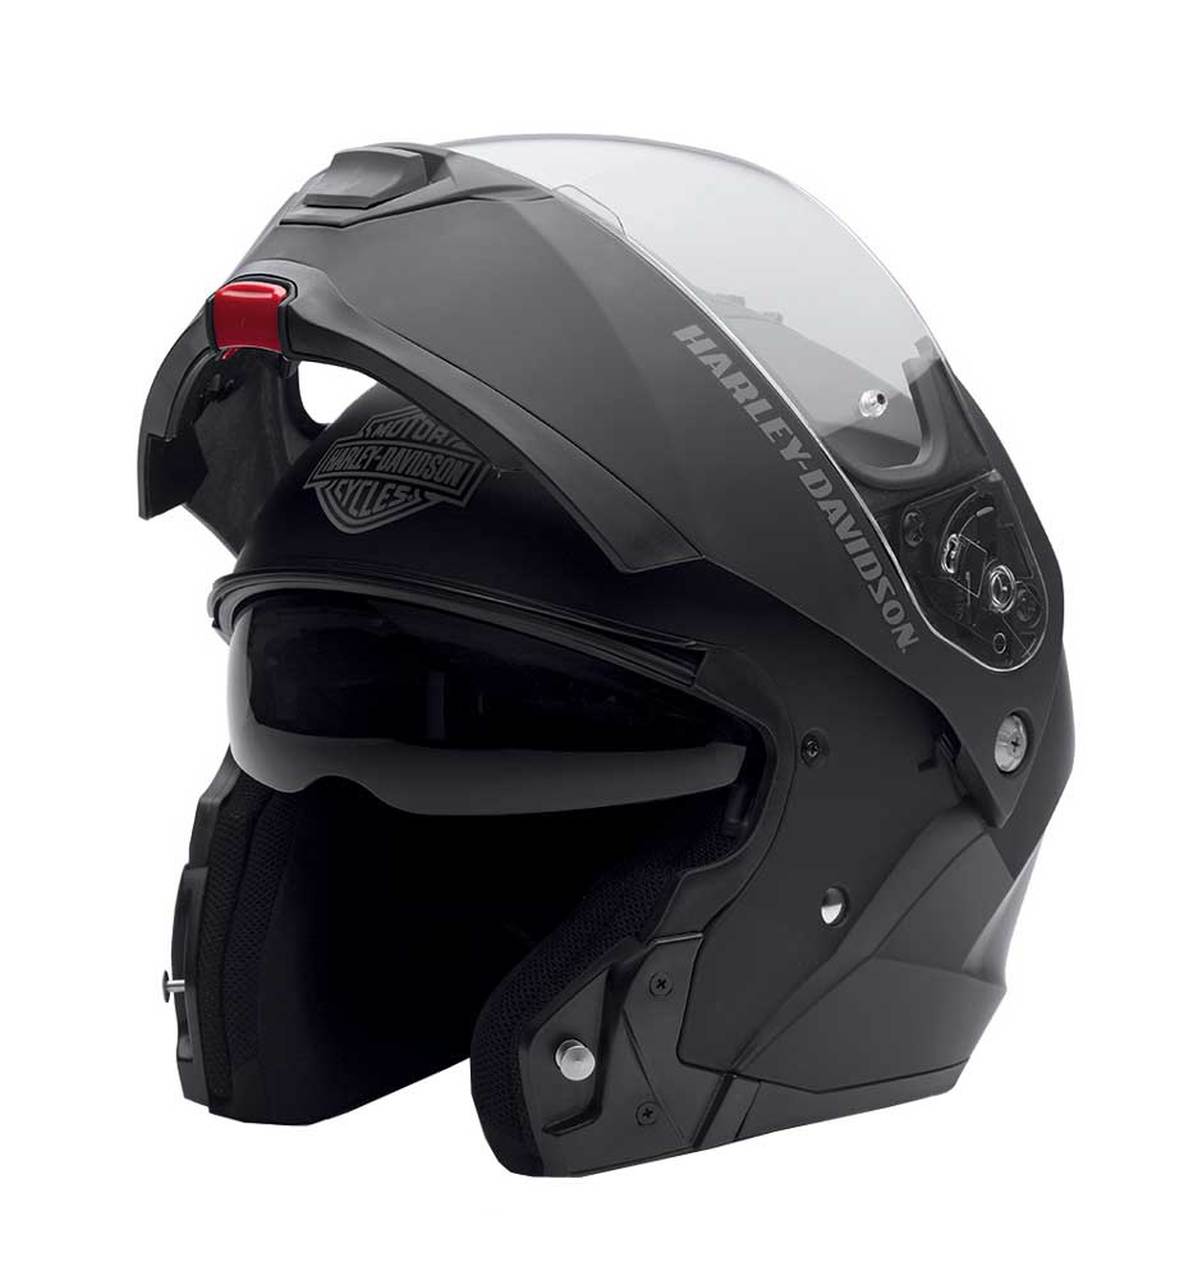 Harley-Davidson® Mens Modular Helmet, Capstone Sun Shield, Matte Black